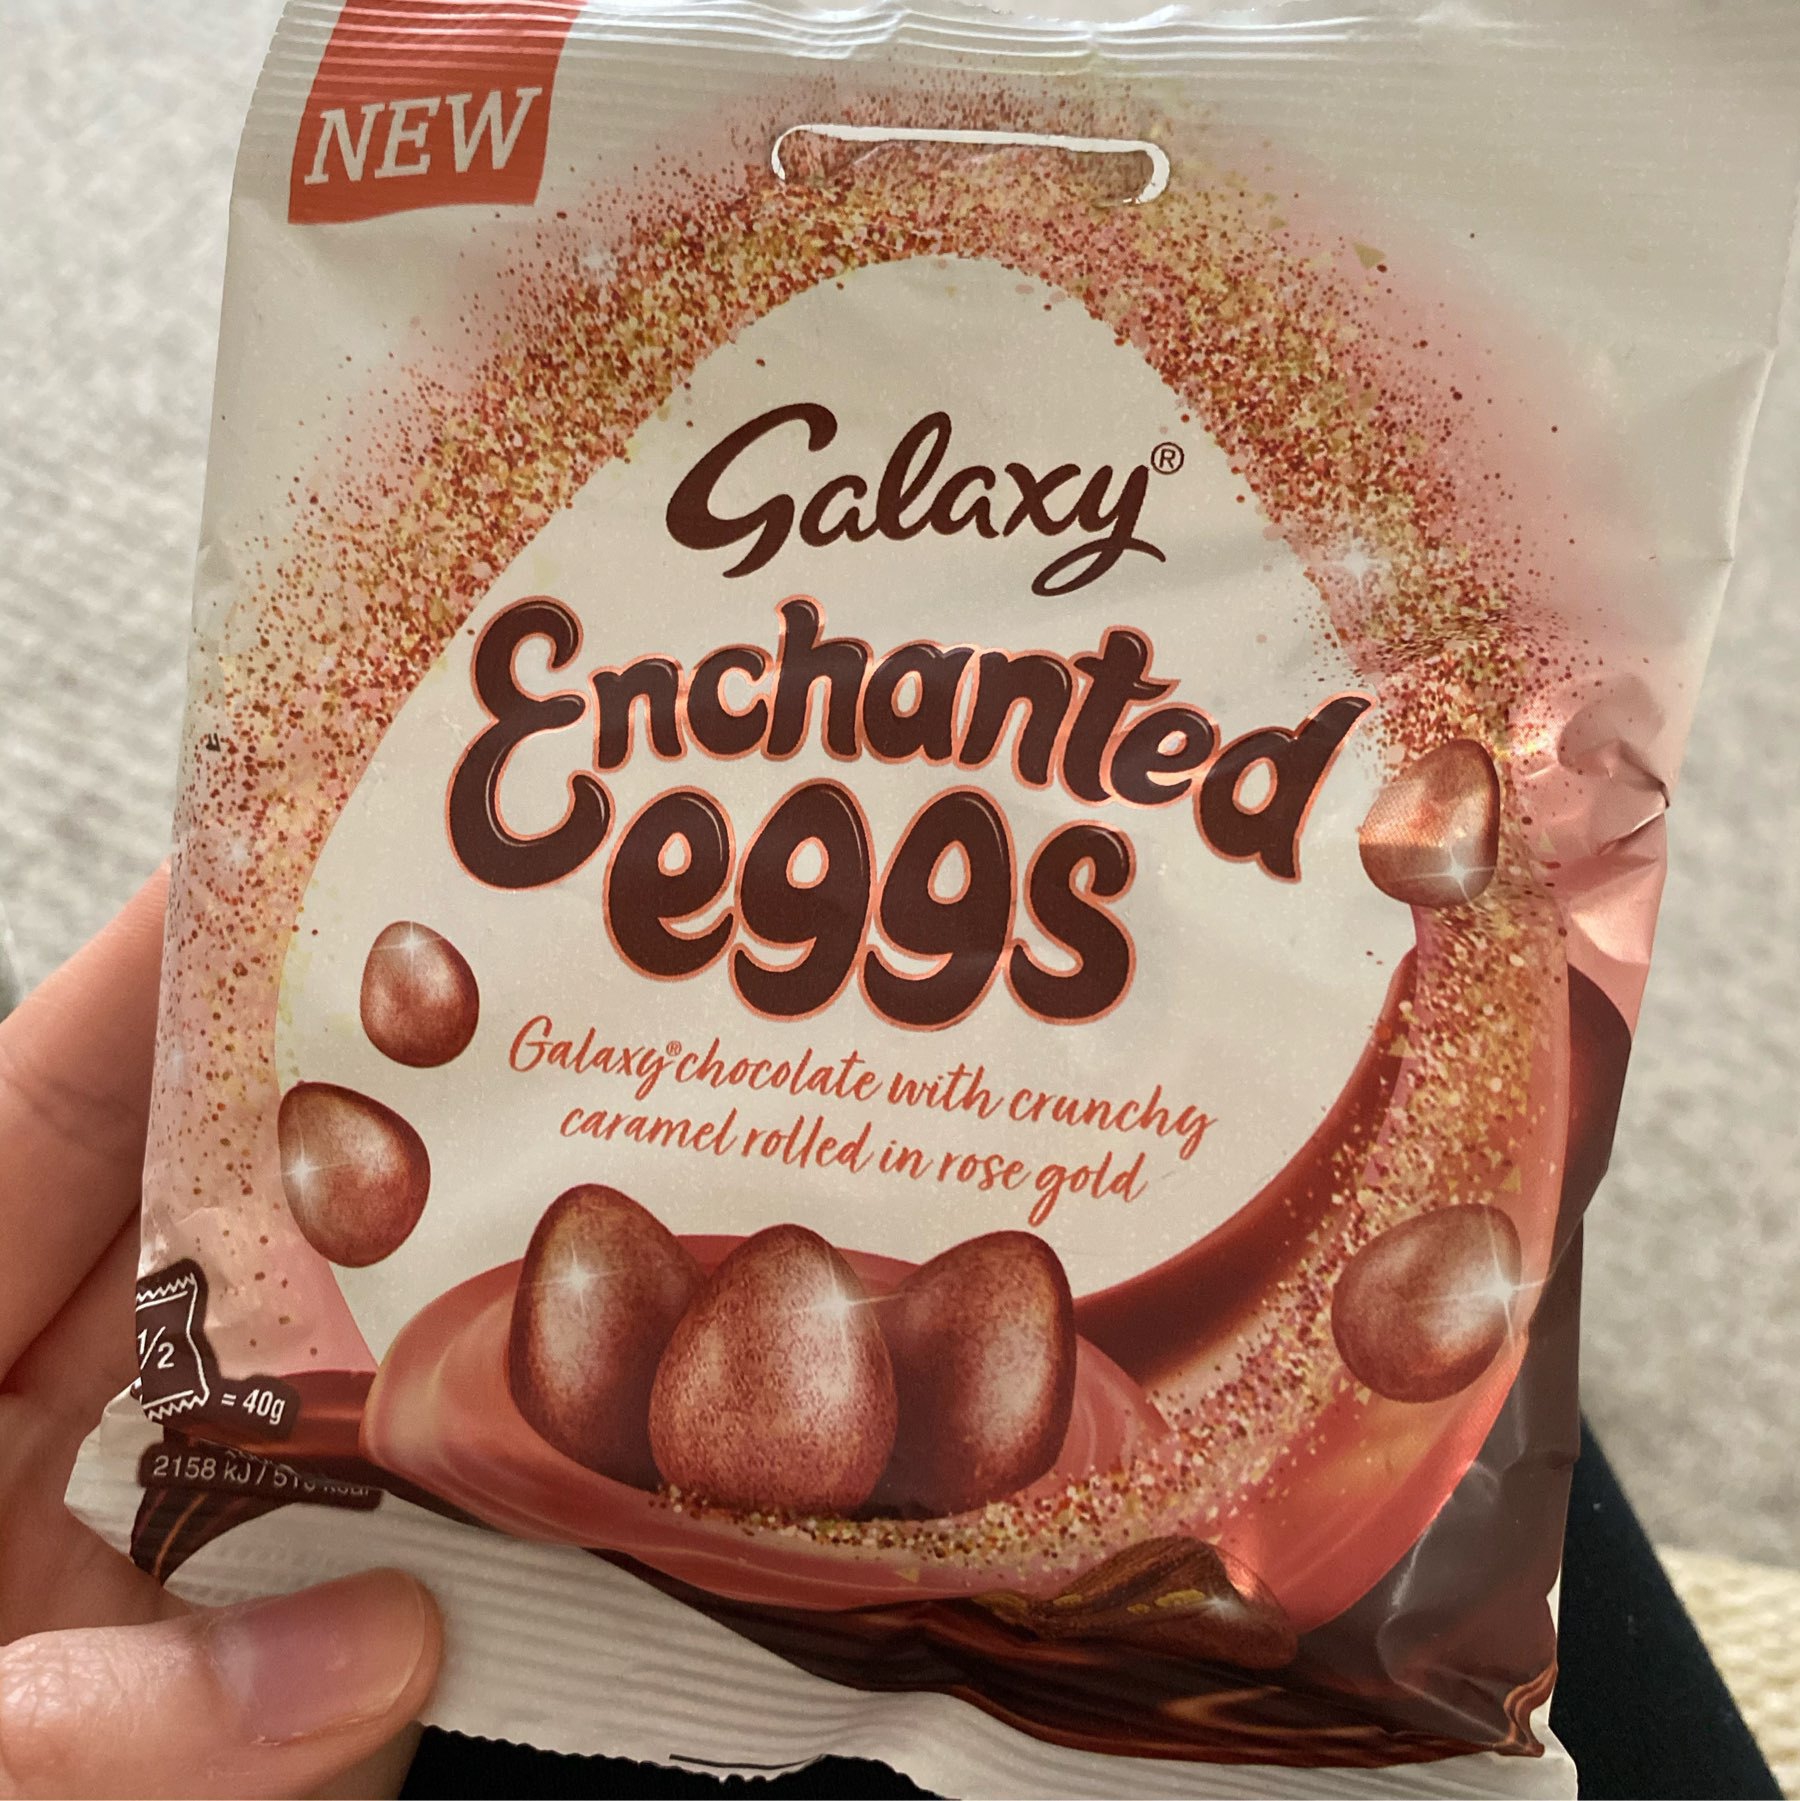 Bag of Galaxy Enchanted Eggs